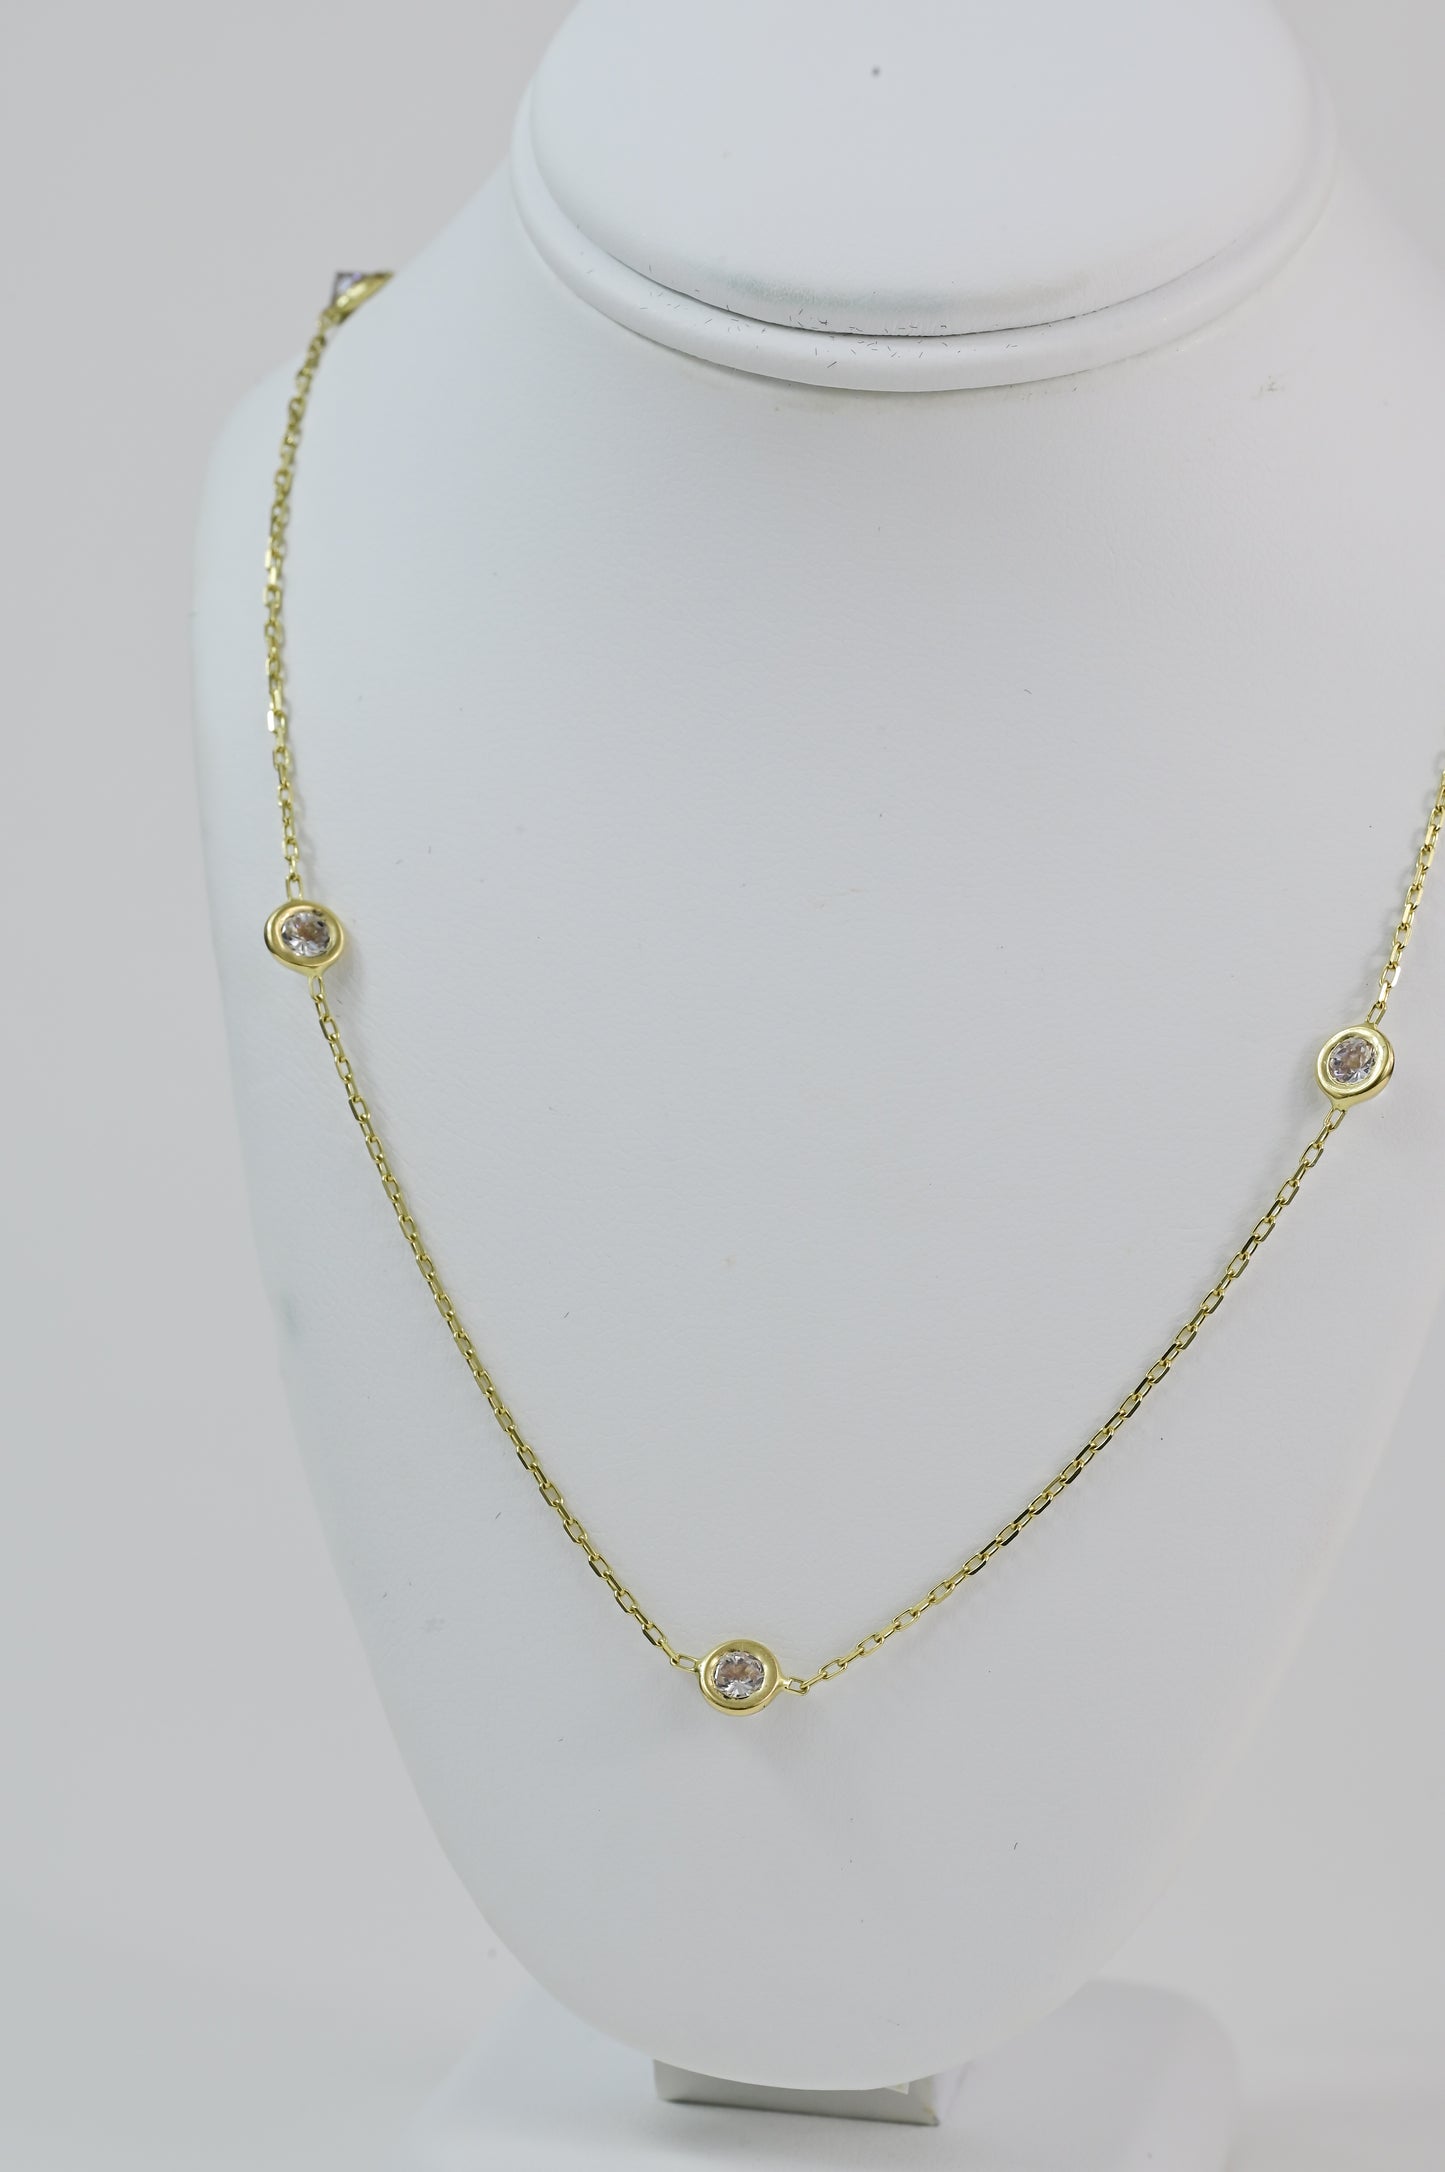 Necklace Yellow Gold with Zirconia stones